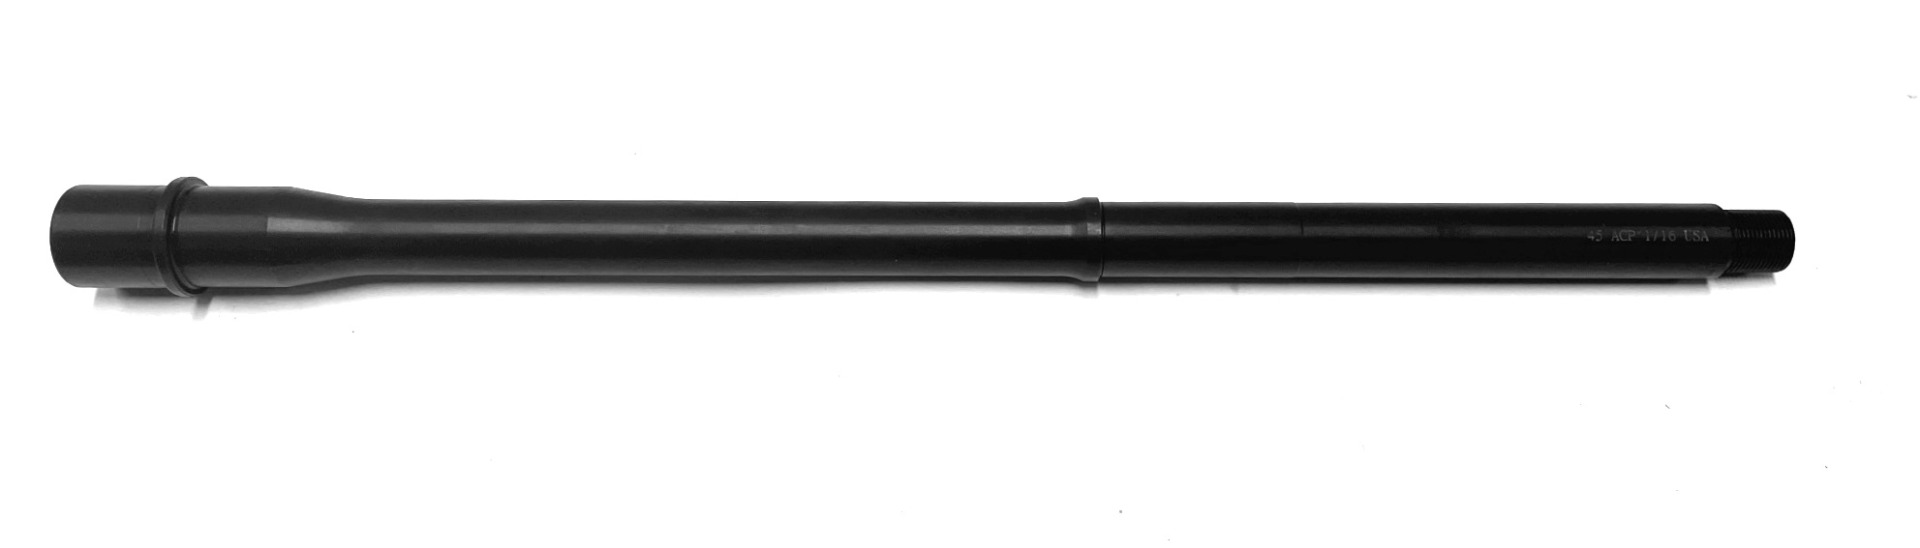 Hitman Industries 16.5 Inch 45 ACP AR-15 Pistol Caliber Melonite Barrel